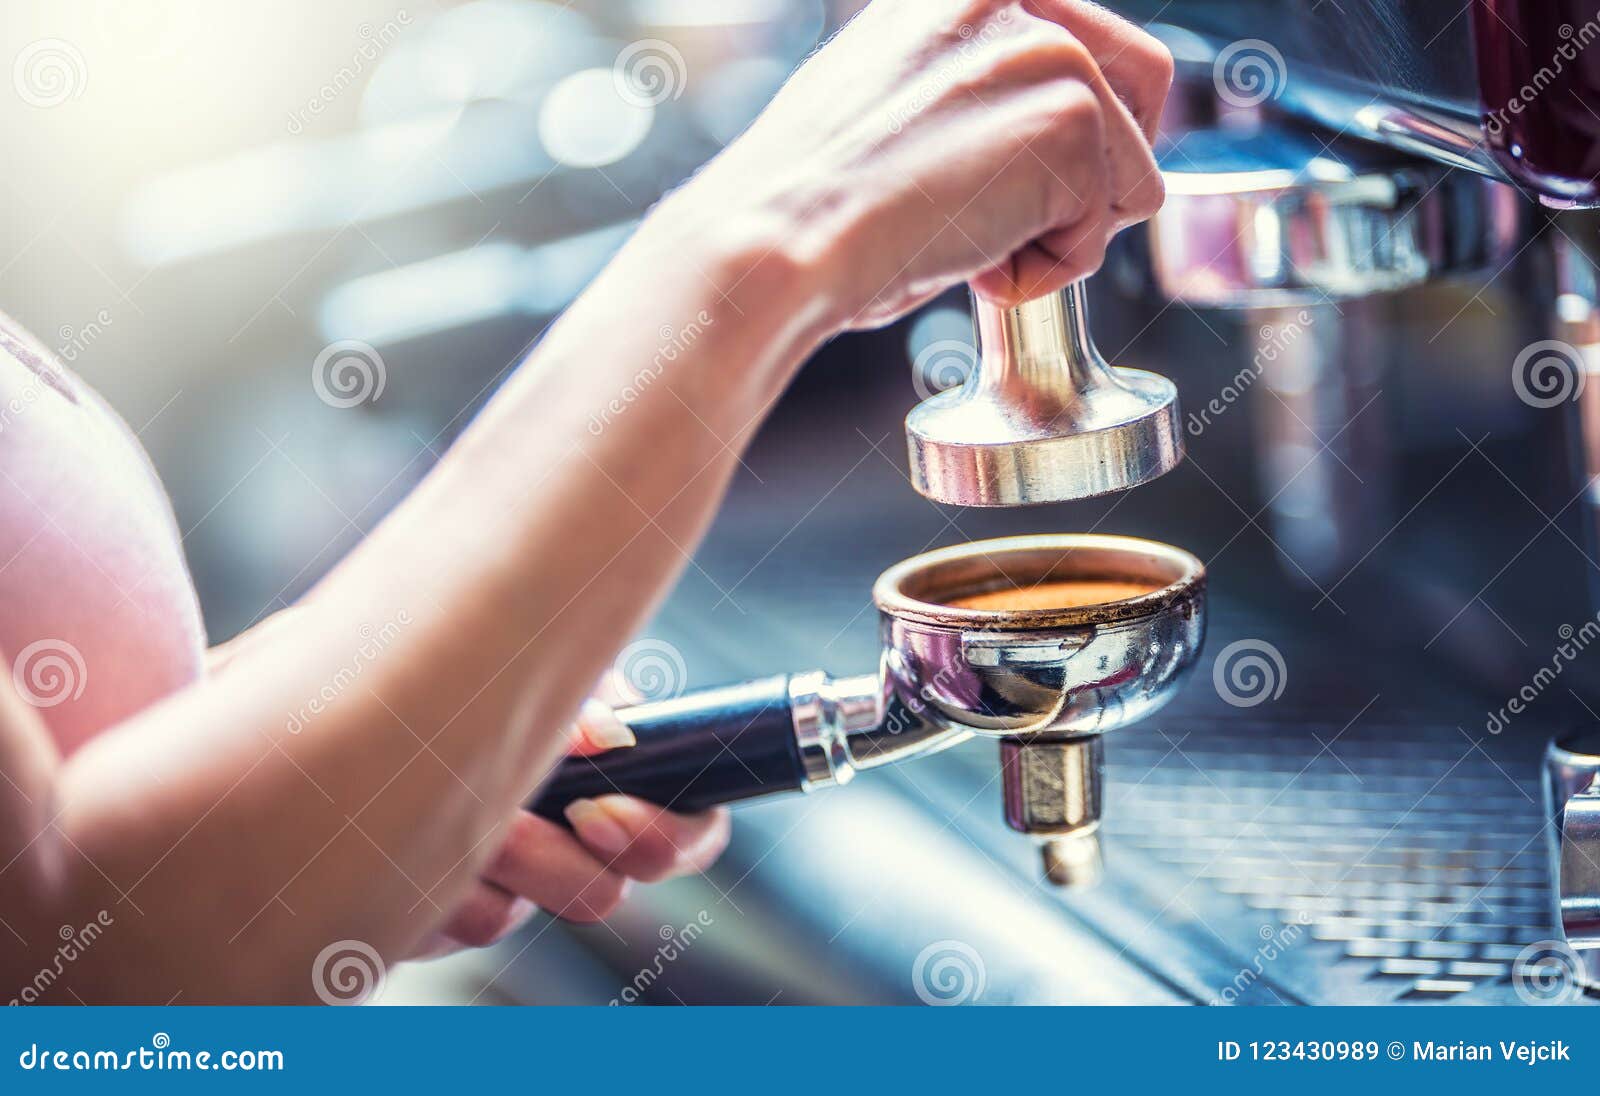 barista woman making an espresso coffee.